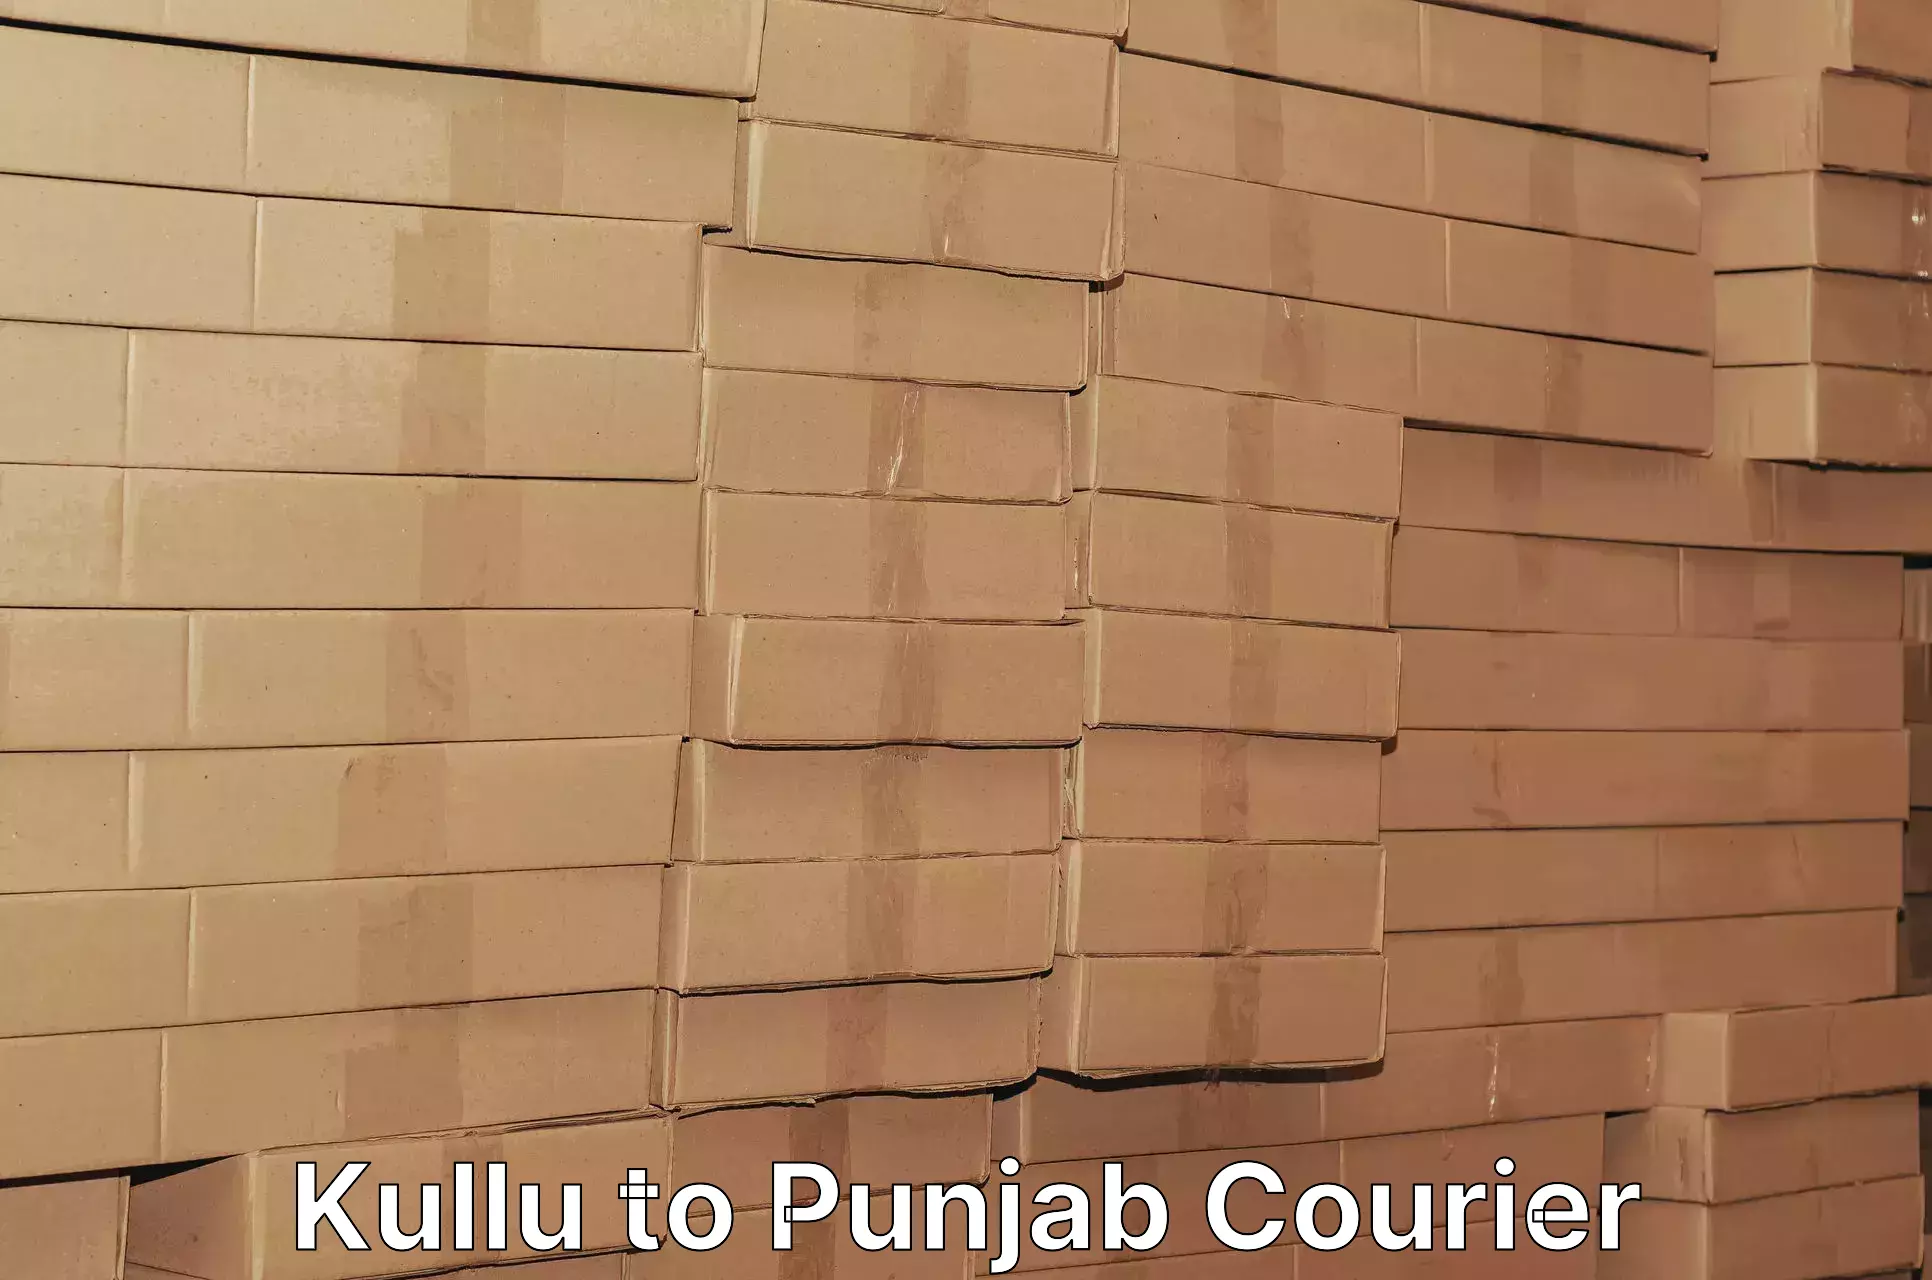 High-capacity parcel service Kullu to Punjab